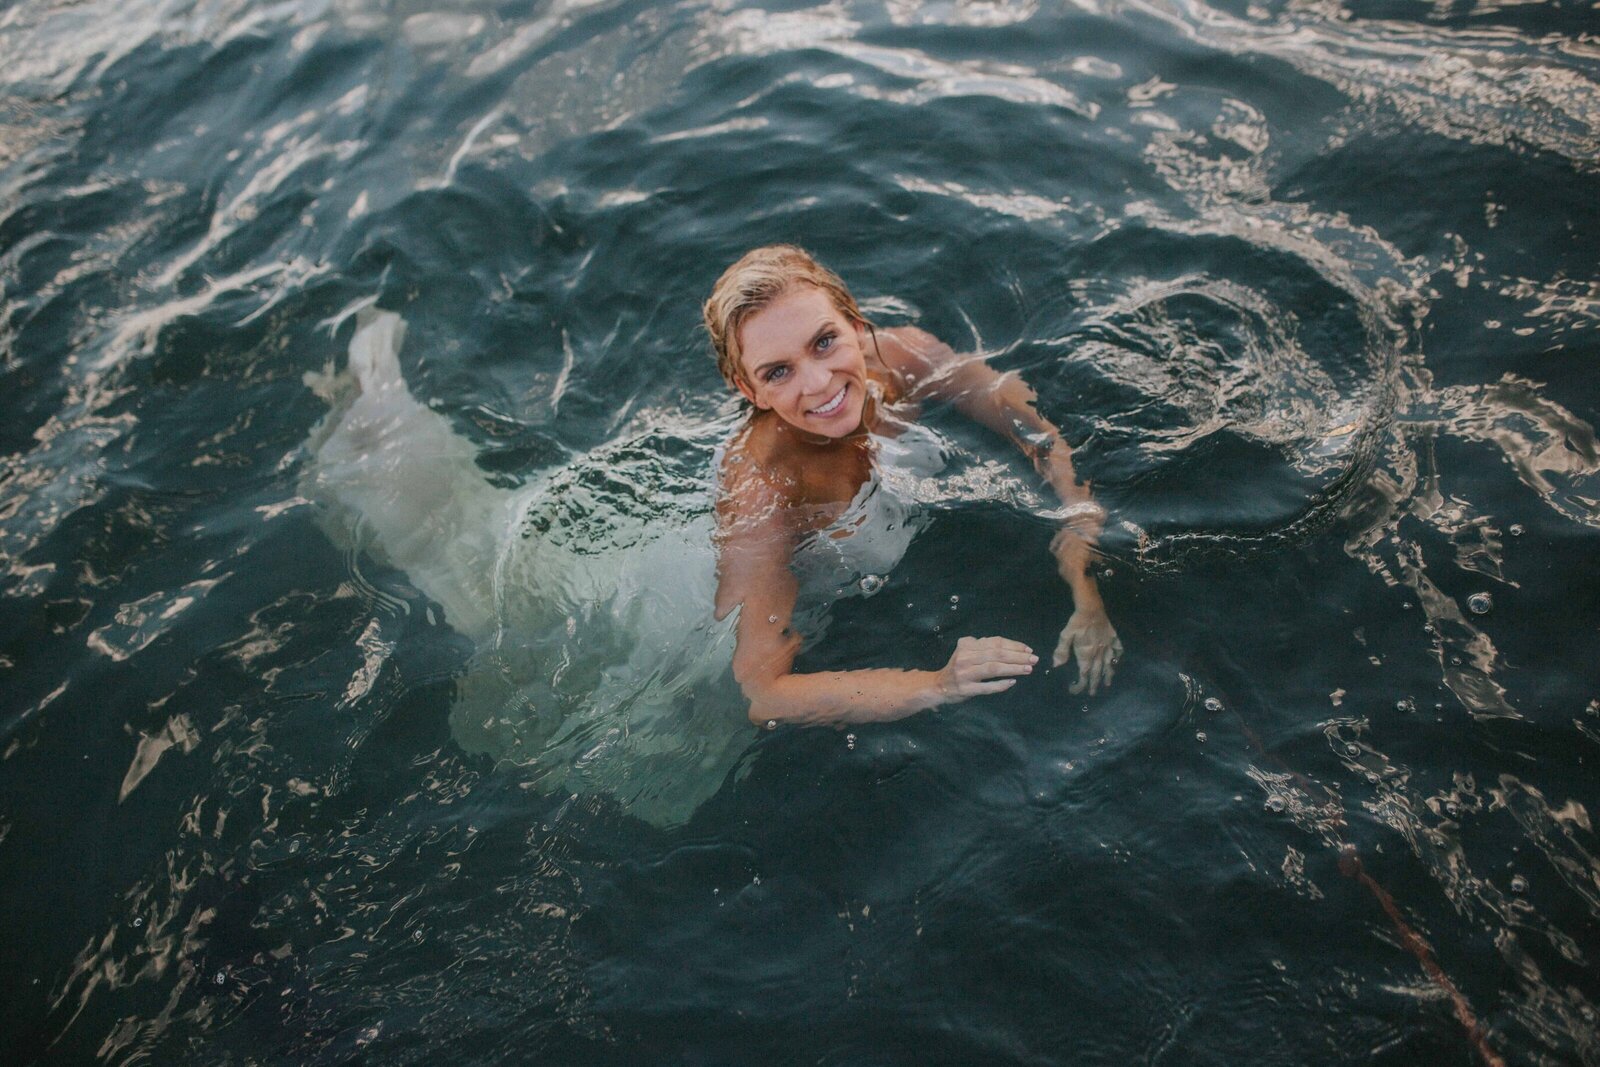 Sacramento Wedding Photographer captures bride swimming in water wearing wedding dress